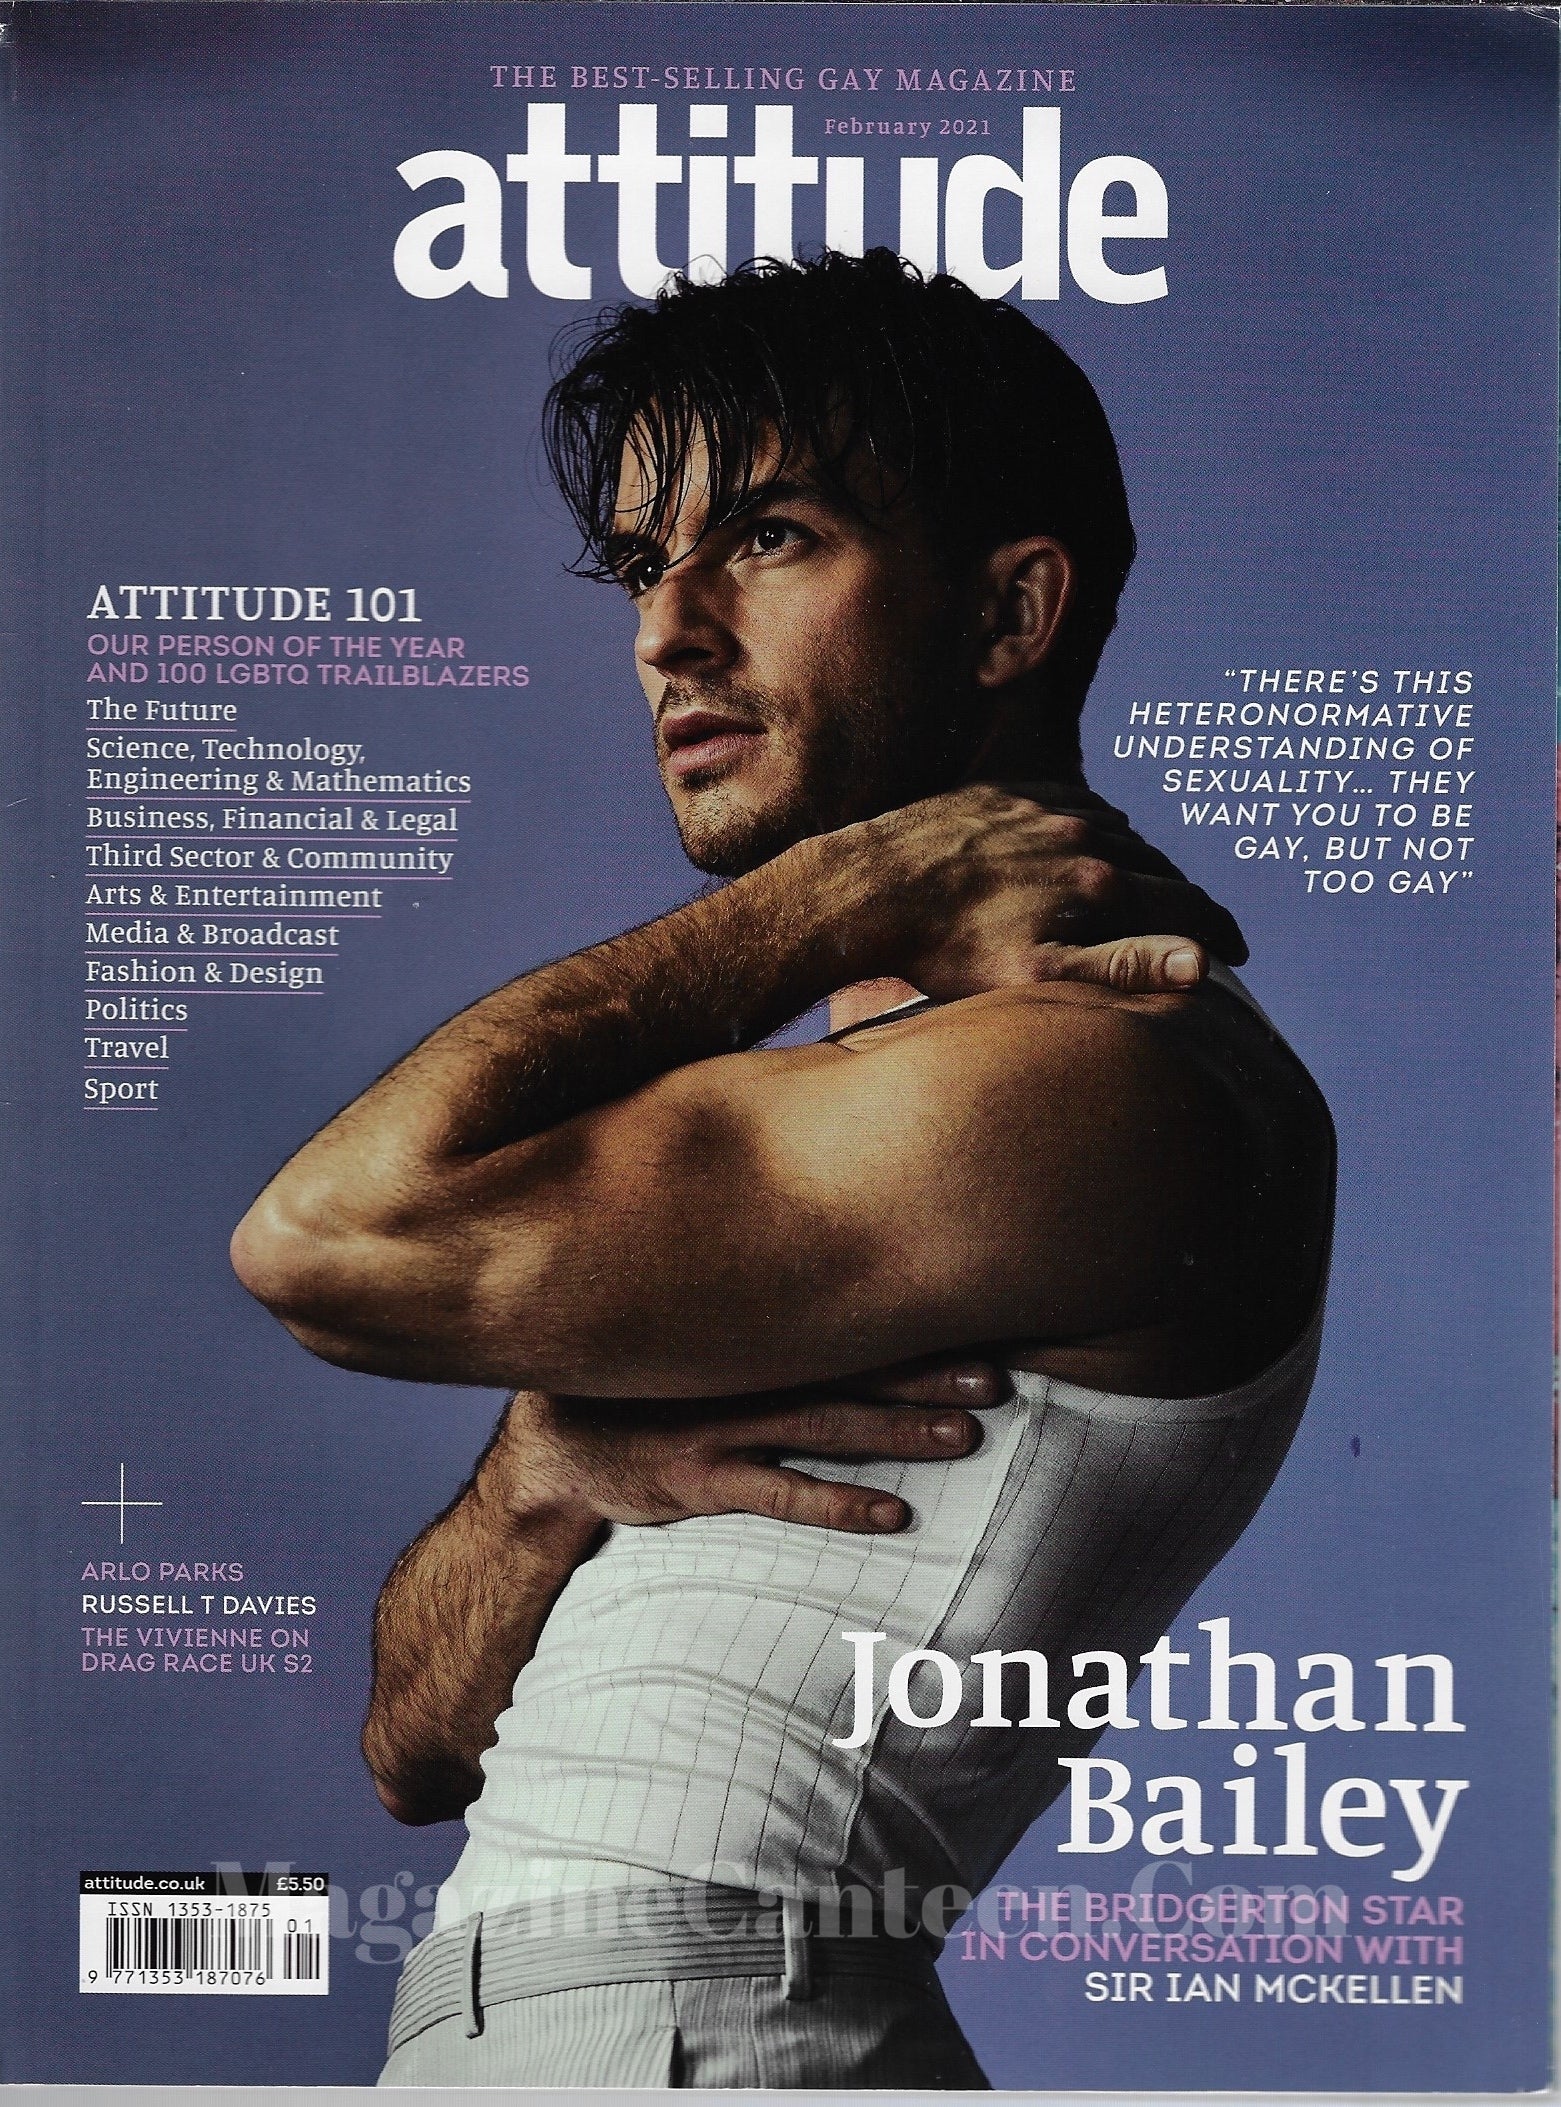 Attitude Magazine 331 - Jonathan Bailey 2021